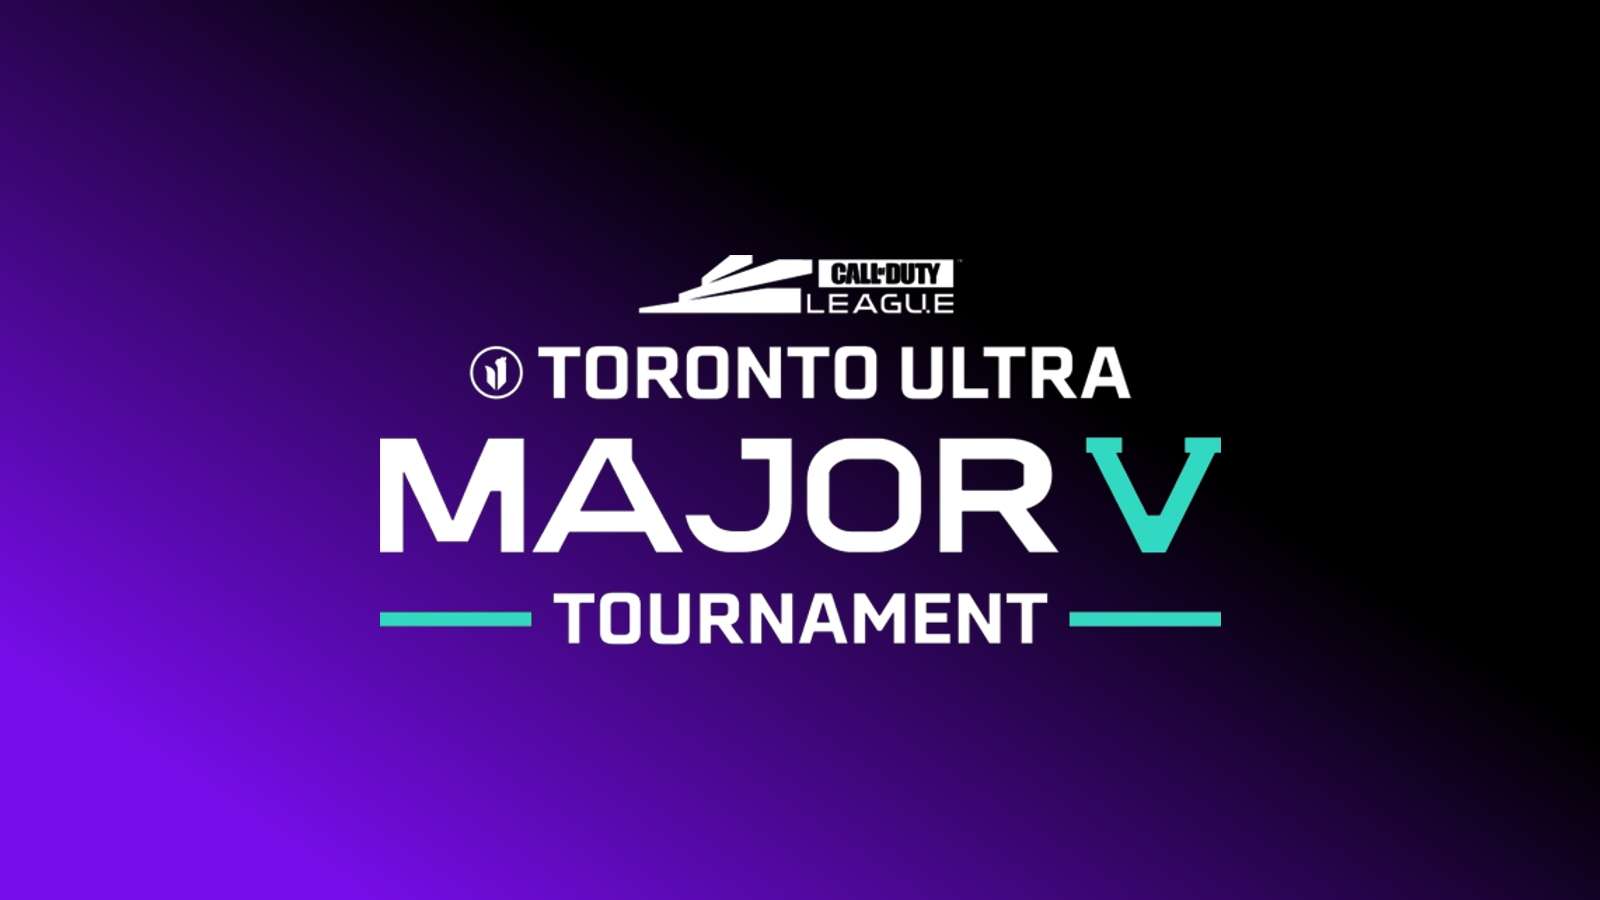 Toronto Ultra Major V Tournament logo on purple and black background